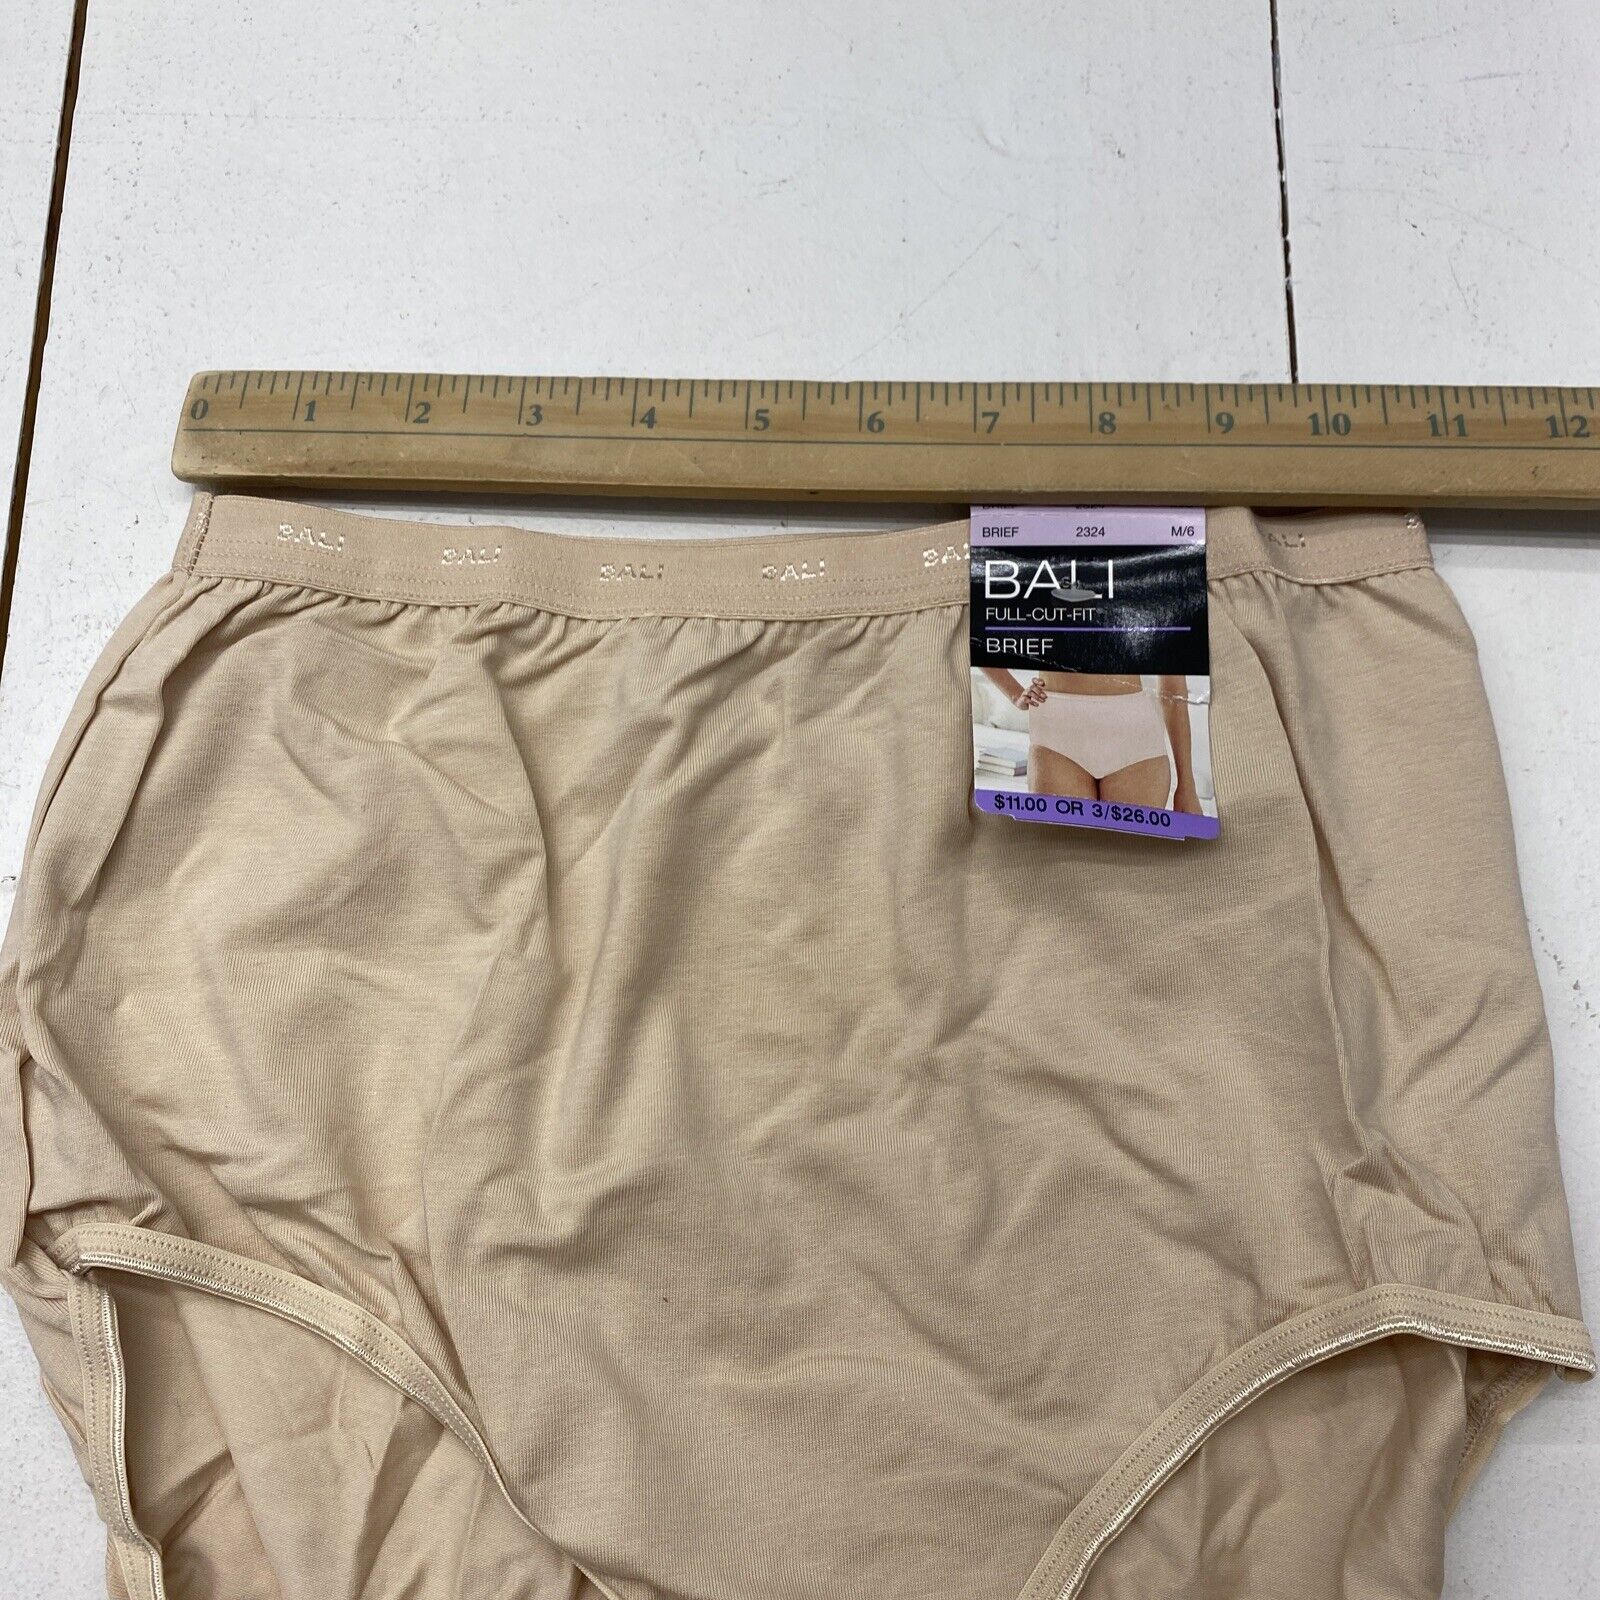 BALI FULL CUT Brief Underwear Stretch Cotton Womens Panties 2324